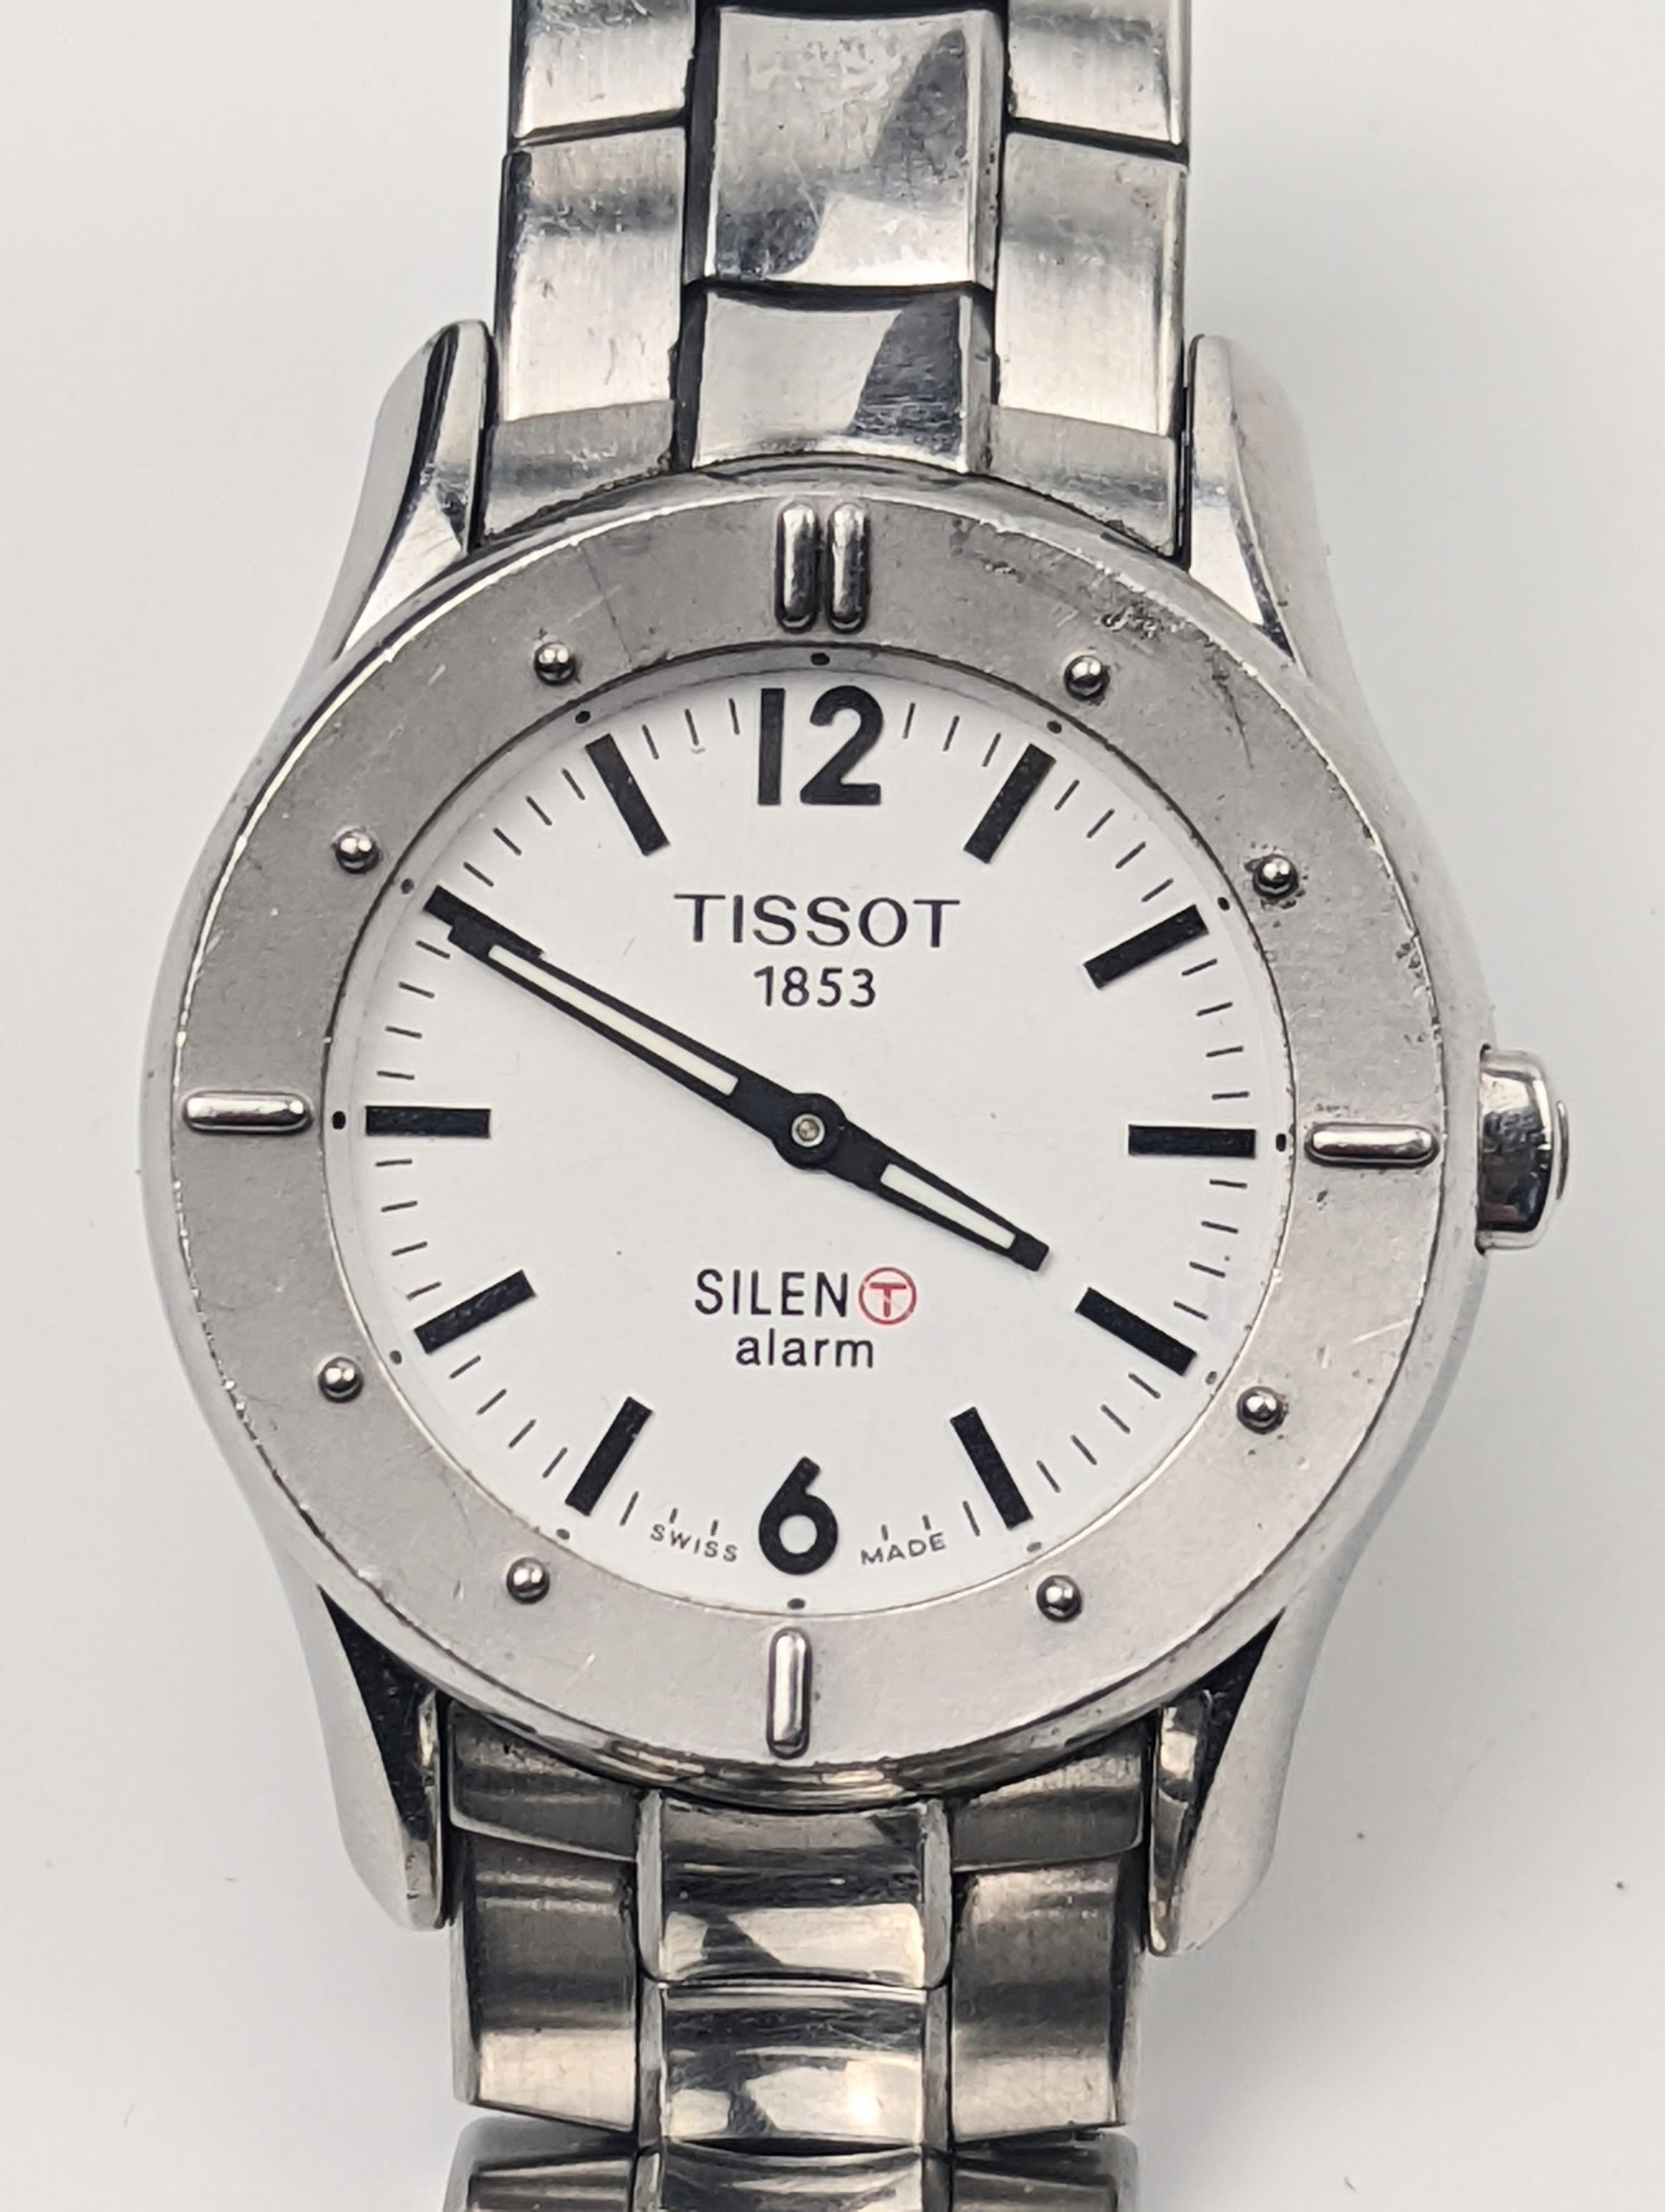 Tissot Silent-T alarm watch, stainless steel bracelet